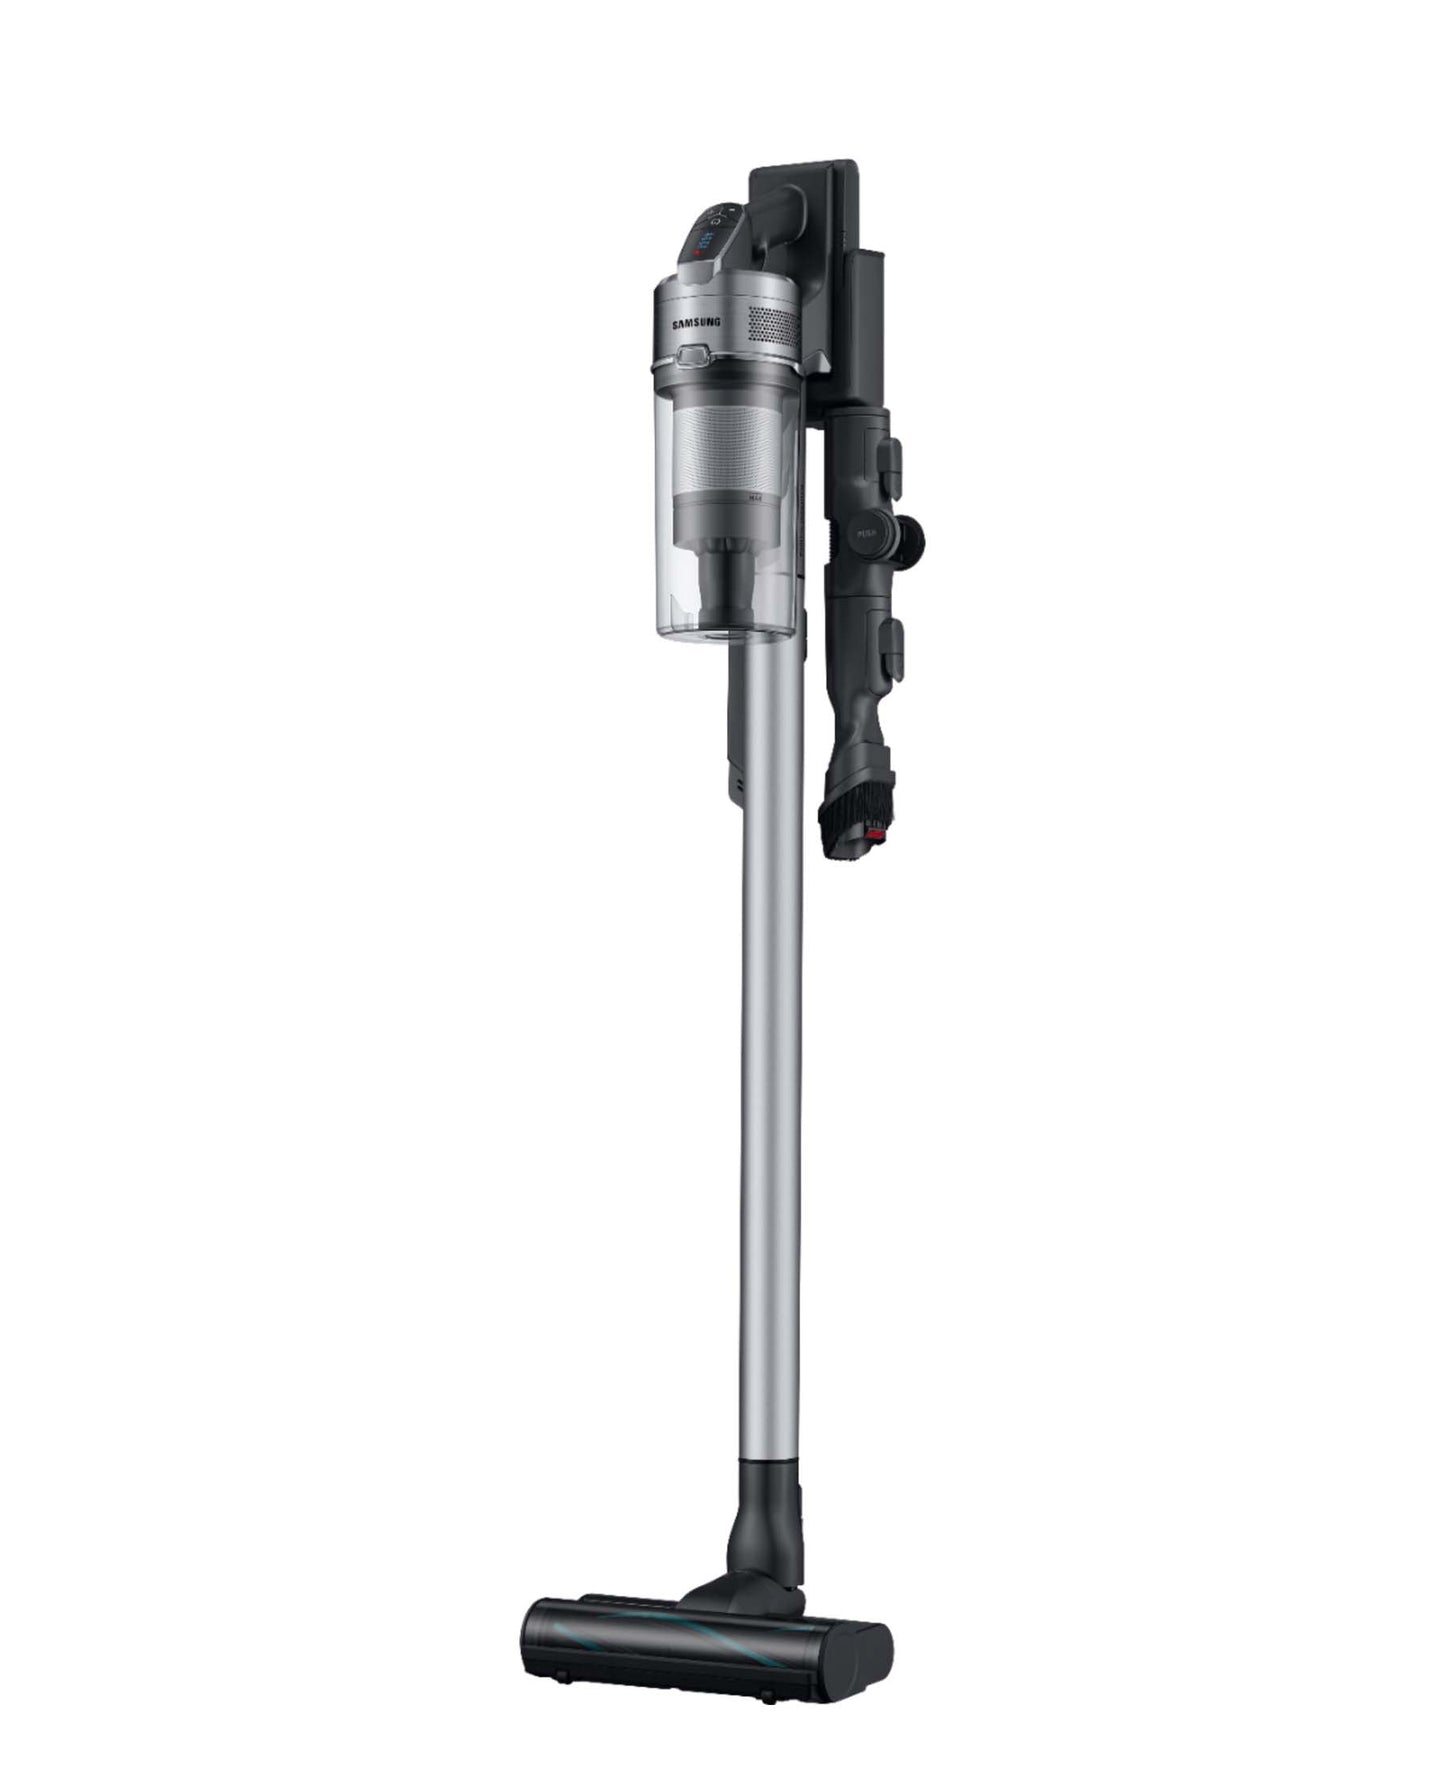 Samsung - Jet 75 Complete Cordless Stick Vacuum Cleaner